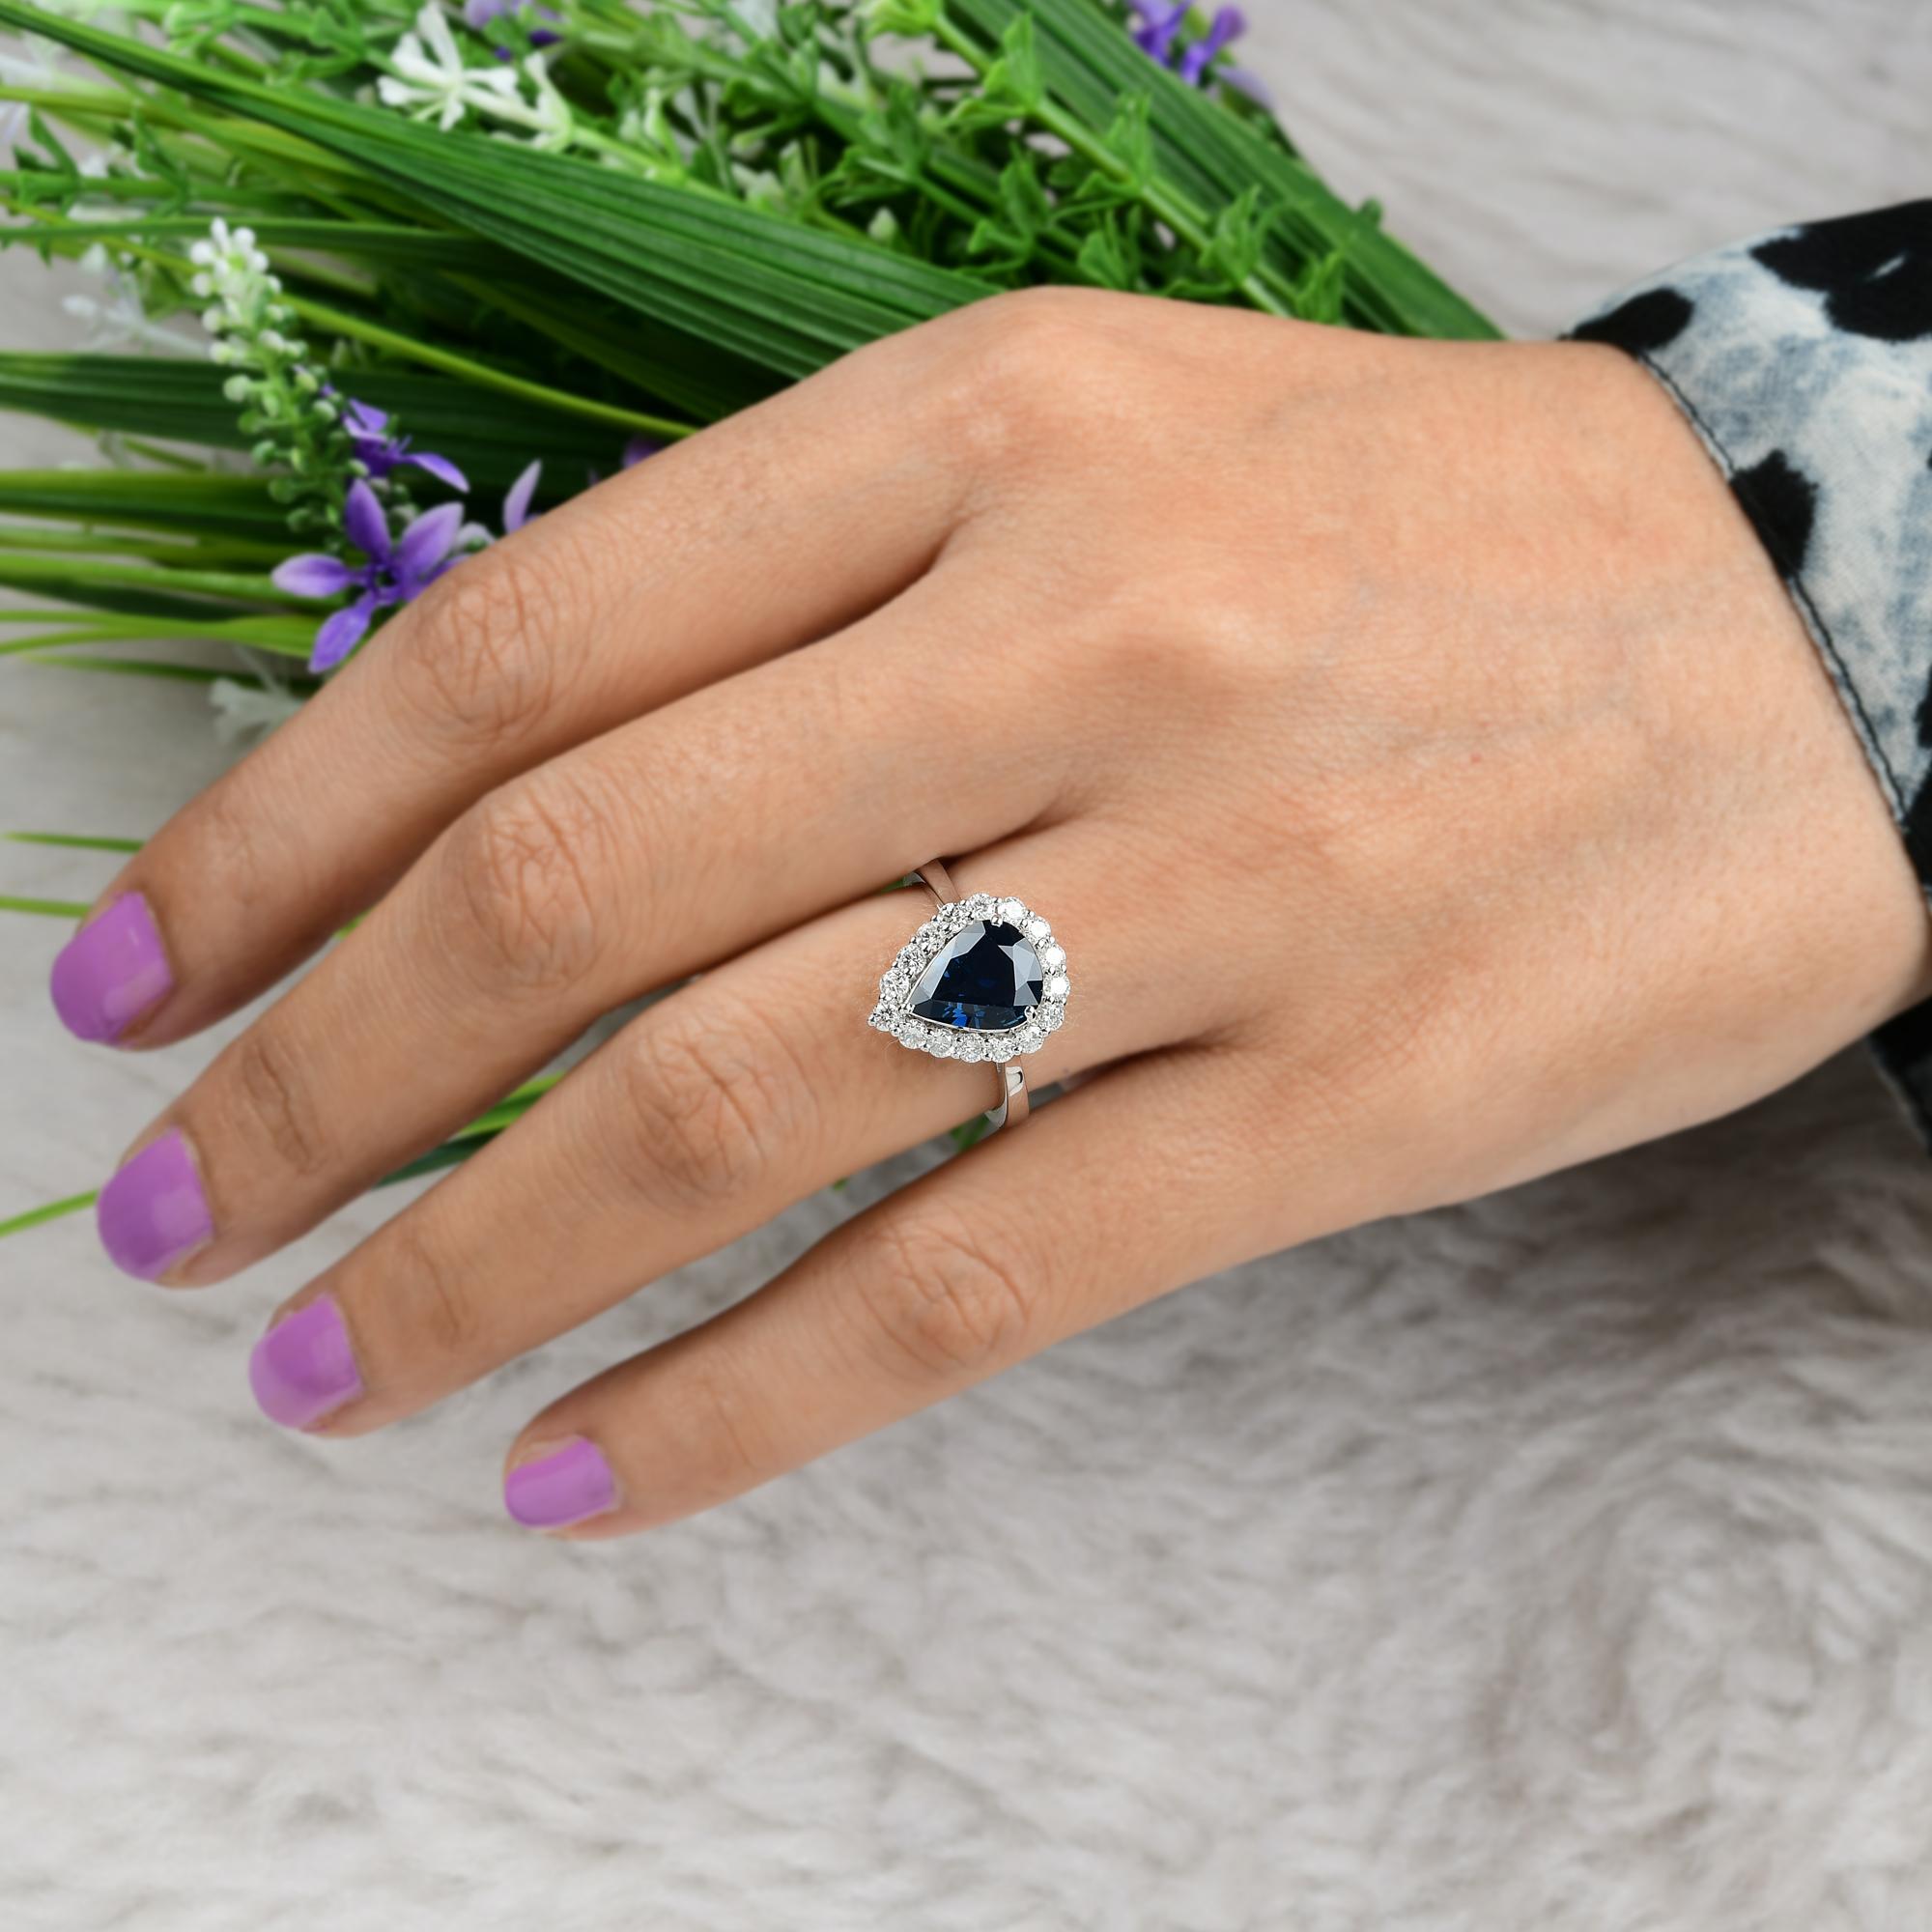 For Sale:  Pear Blue Sapphire Gemstone Cocktail Ring Diamond 18 Karat White Gold Jewelry 5